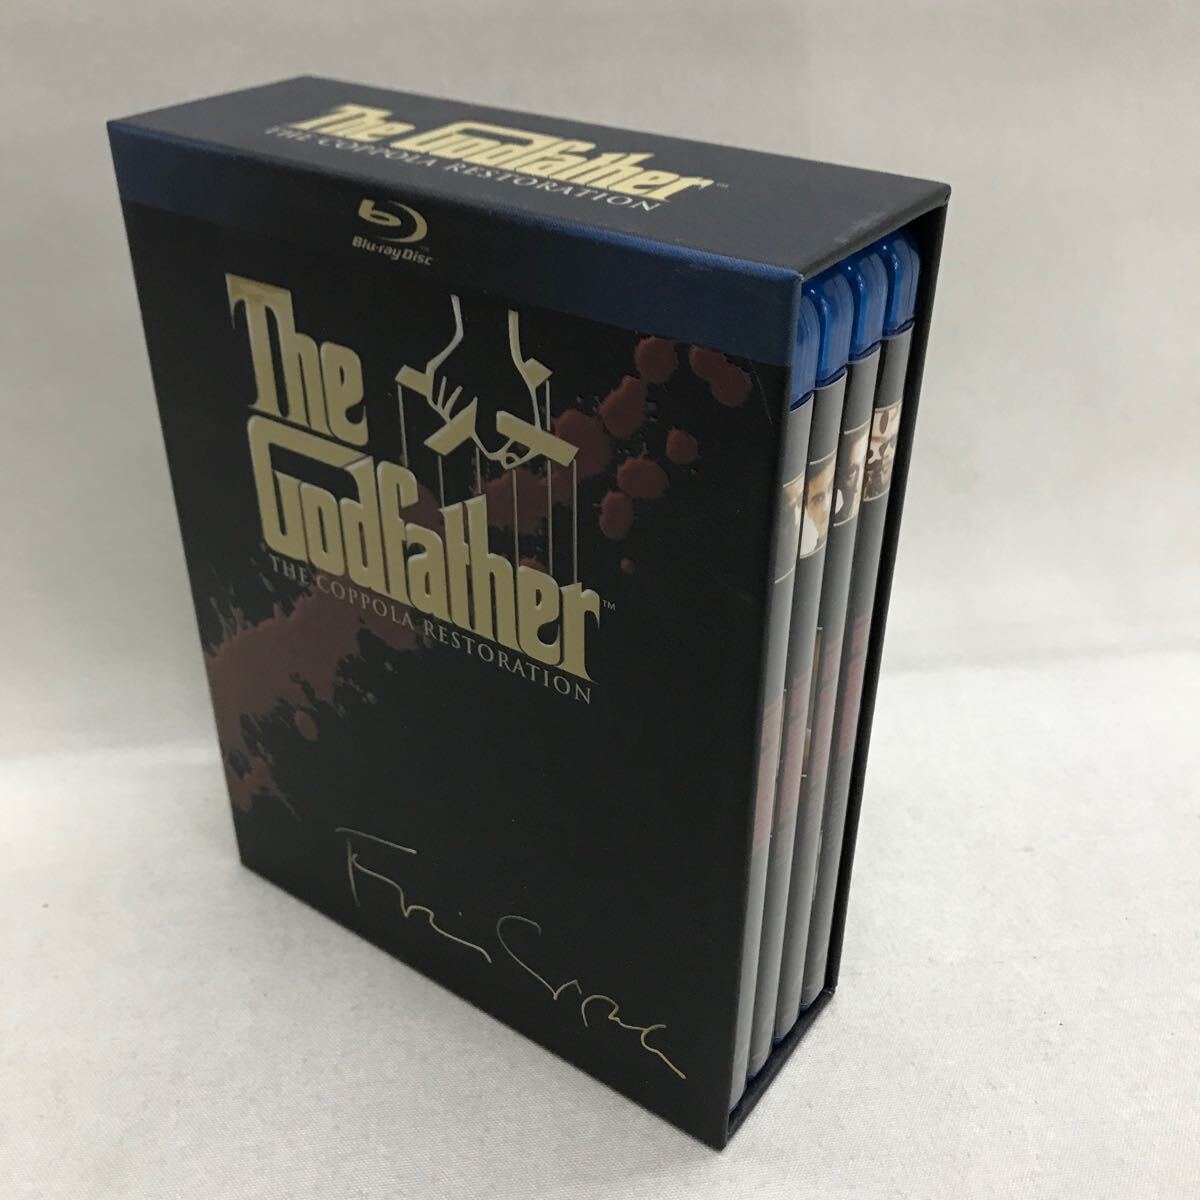 【3S33-058】送料無料 Blu-ray BOX The Godfather THE COPPOLA RESTORATION ゴッドファーザー リストレーション BD4枚組の画像1